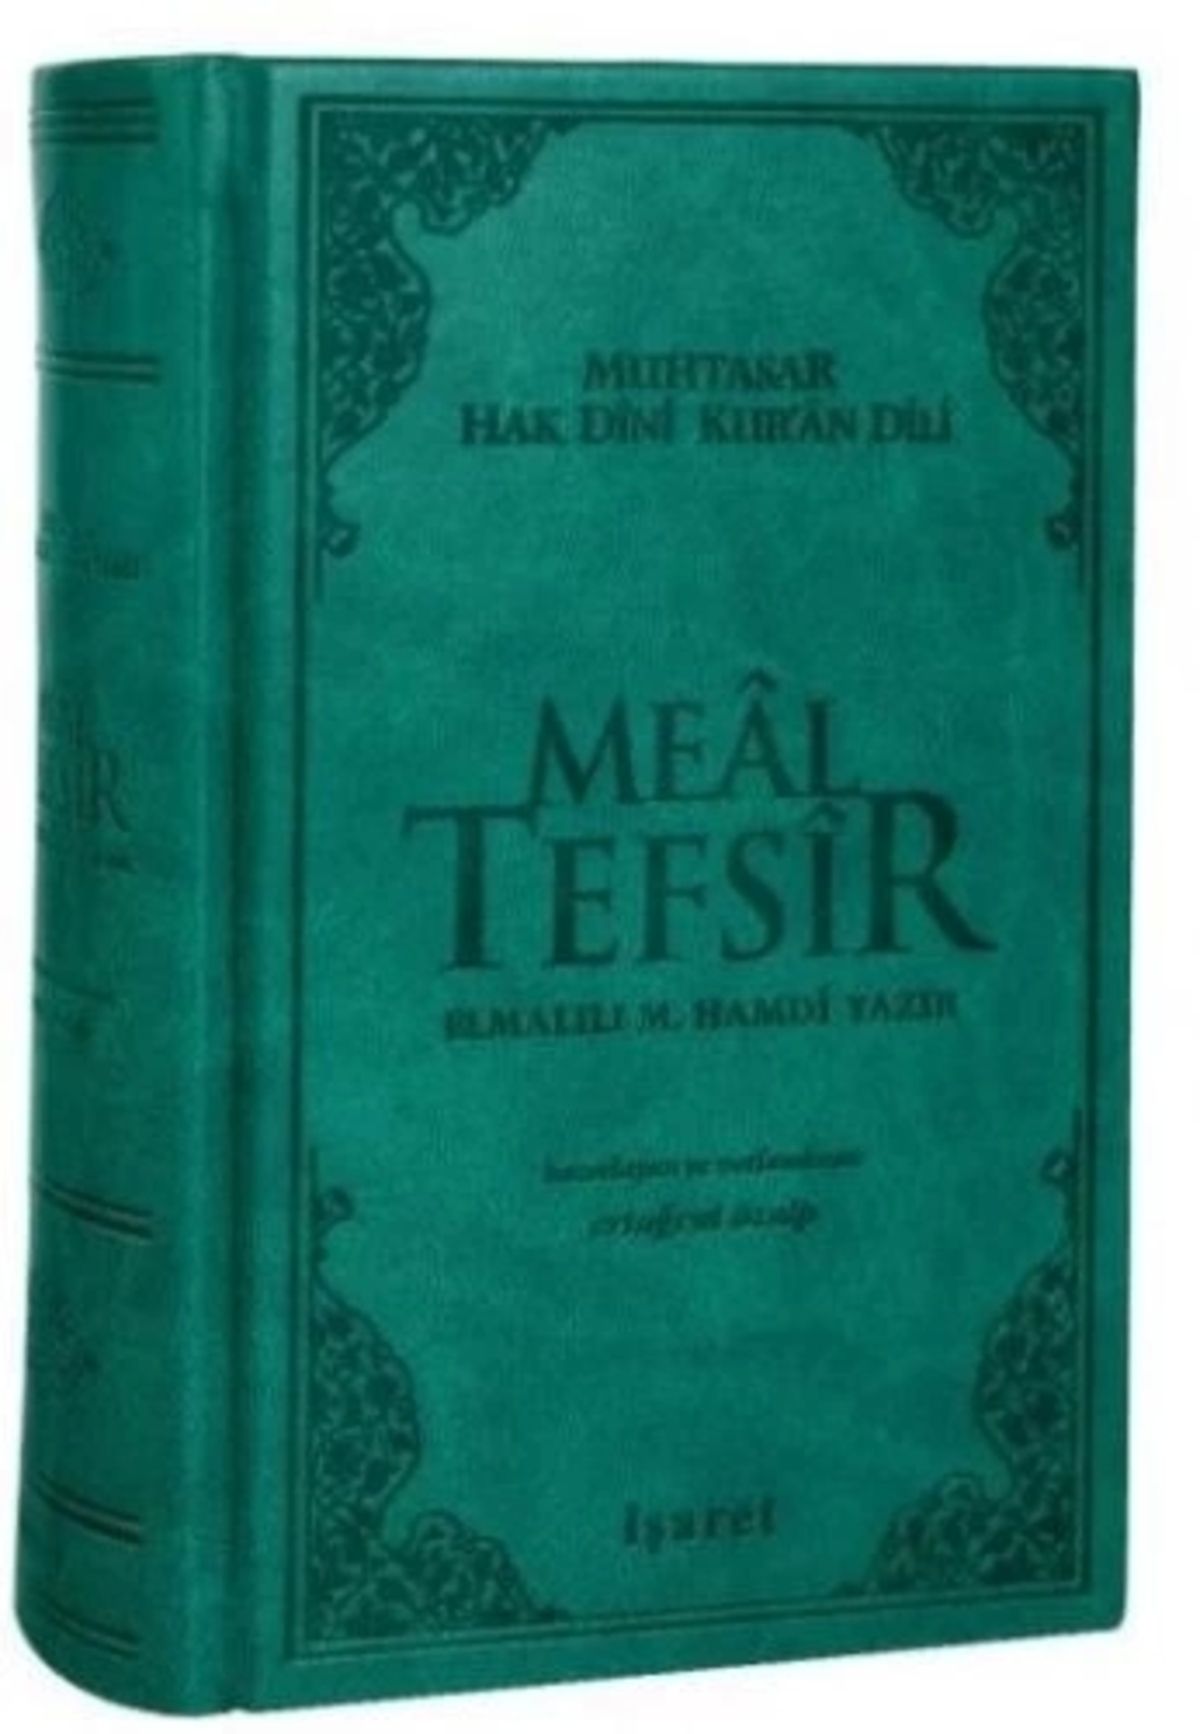 Genel Markalar Muhtasar Hak Dini Kur'an Dili Meal Tefsir (11x17)